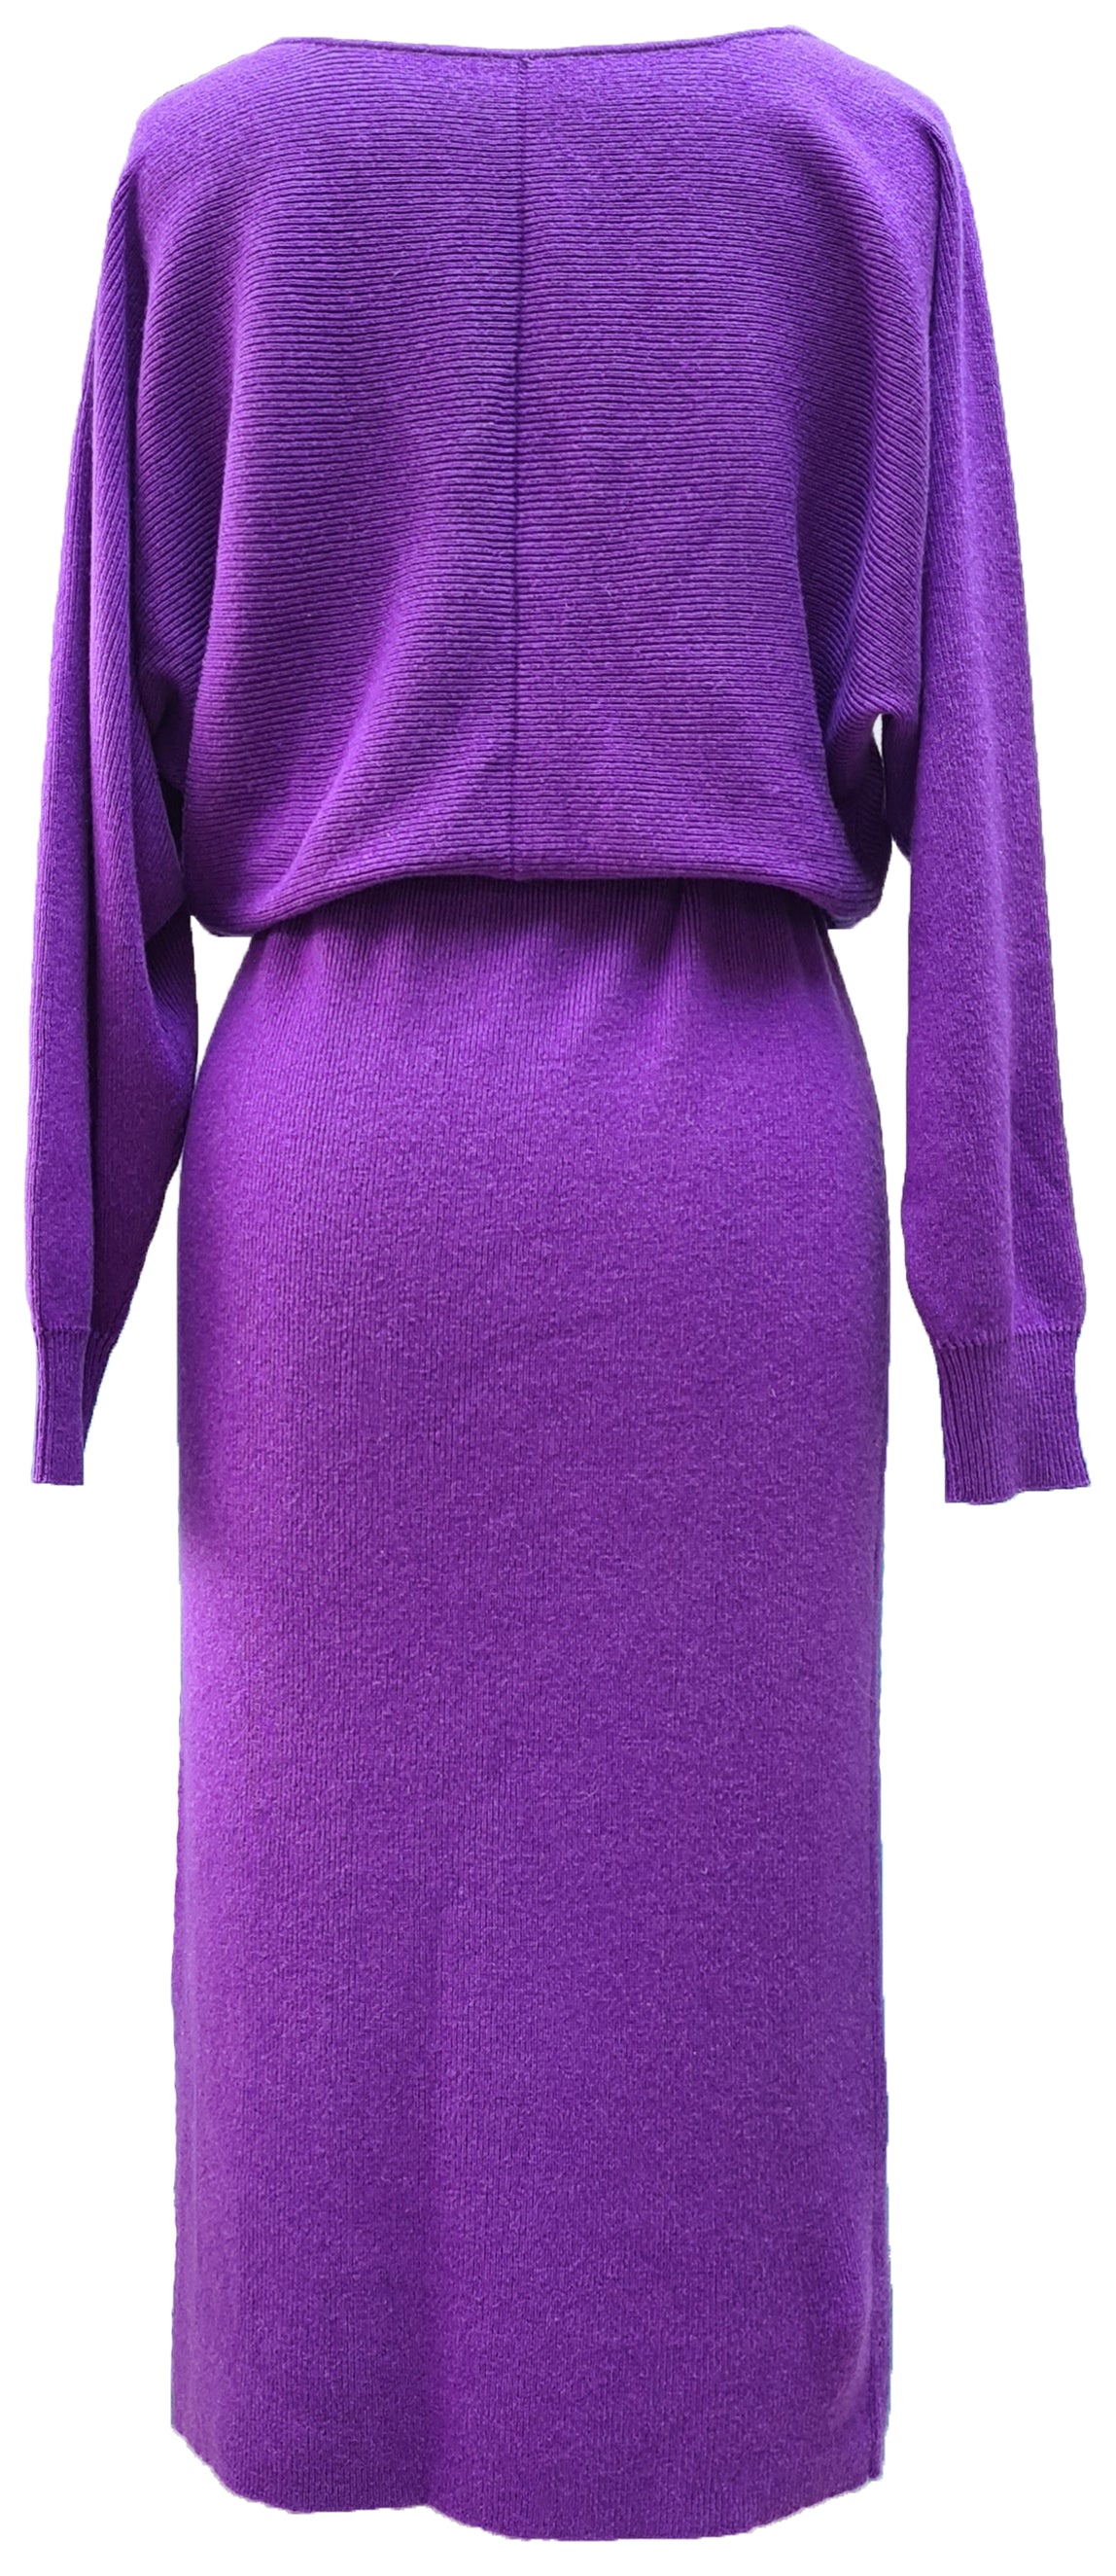 Zara Cashmere Blend Knitted Dress DRK791 Purple